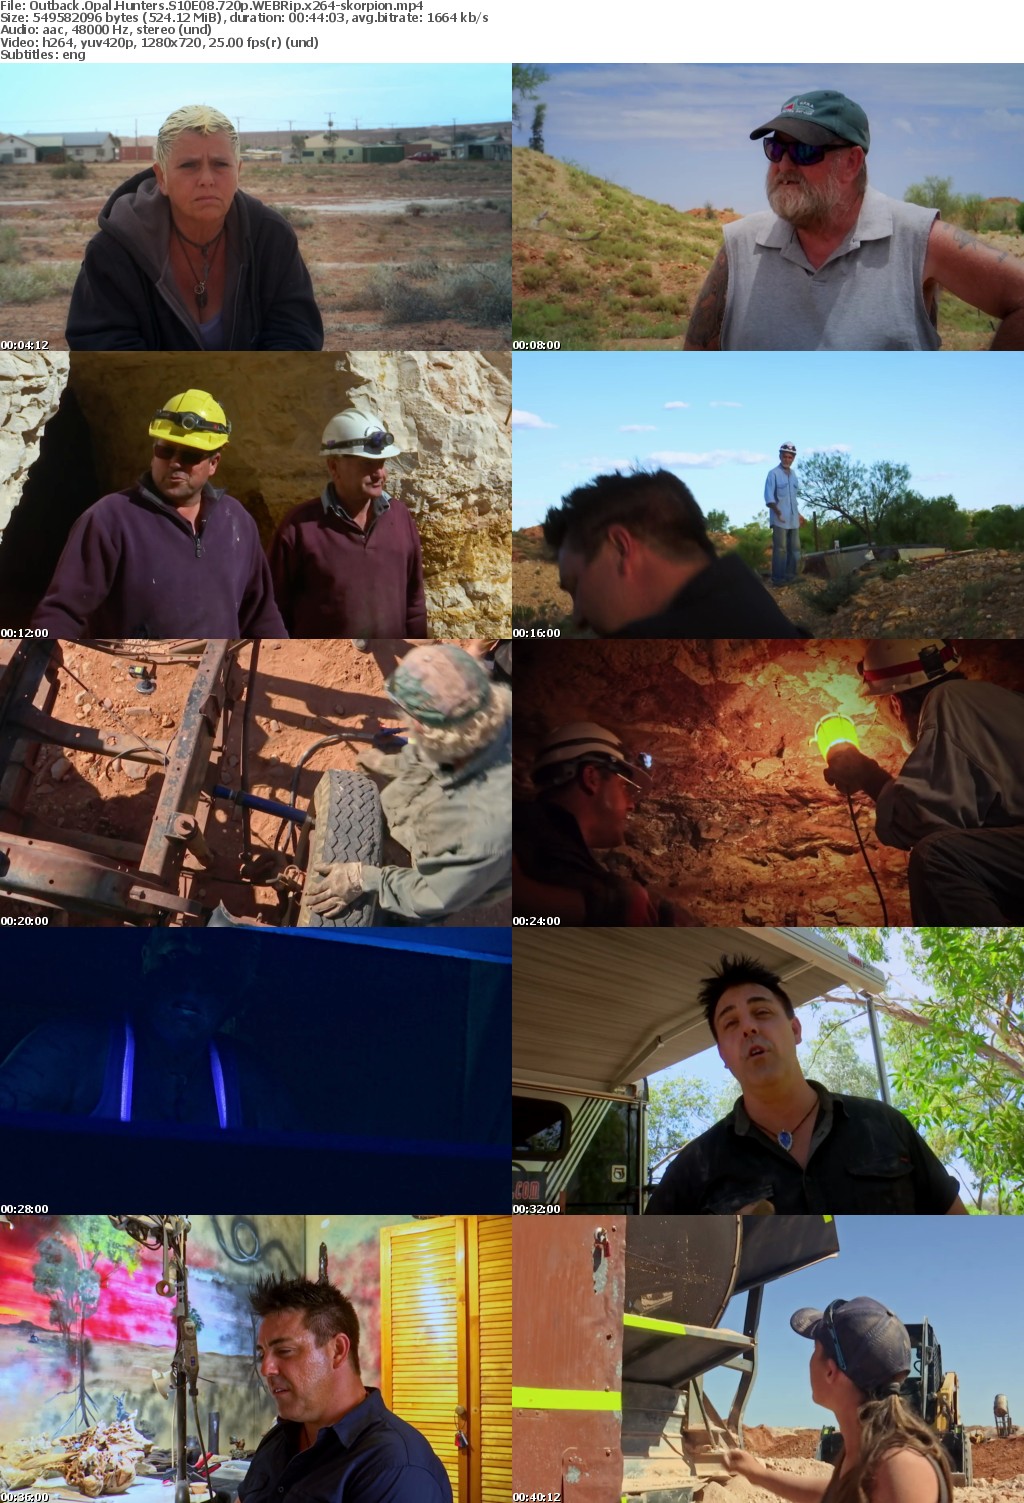 Outback Opal Hunters S10E08 720p WEBRip x264-skorpion mp4